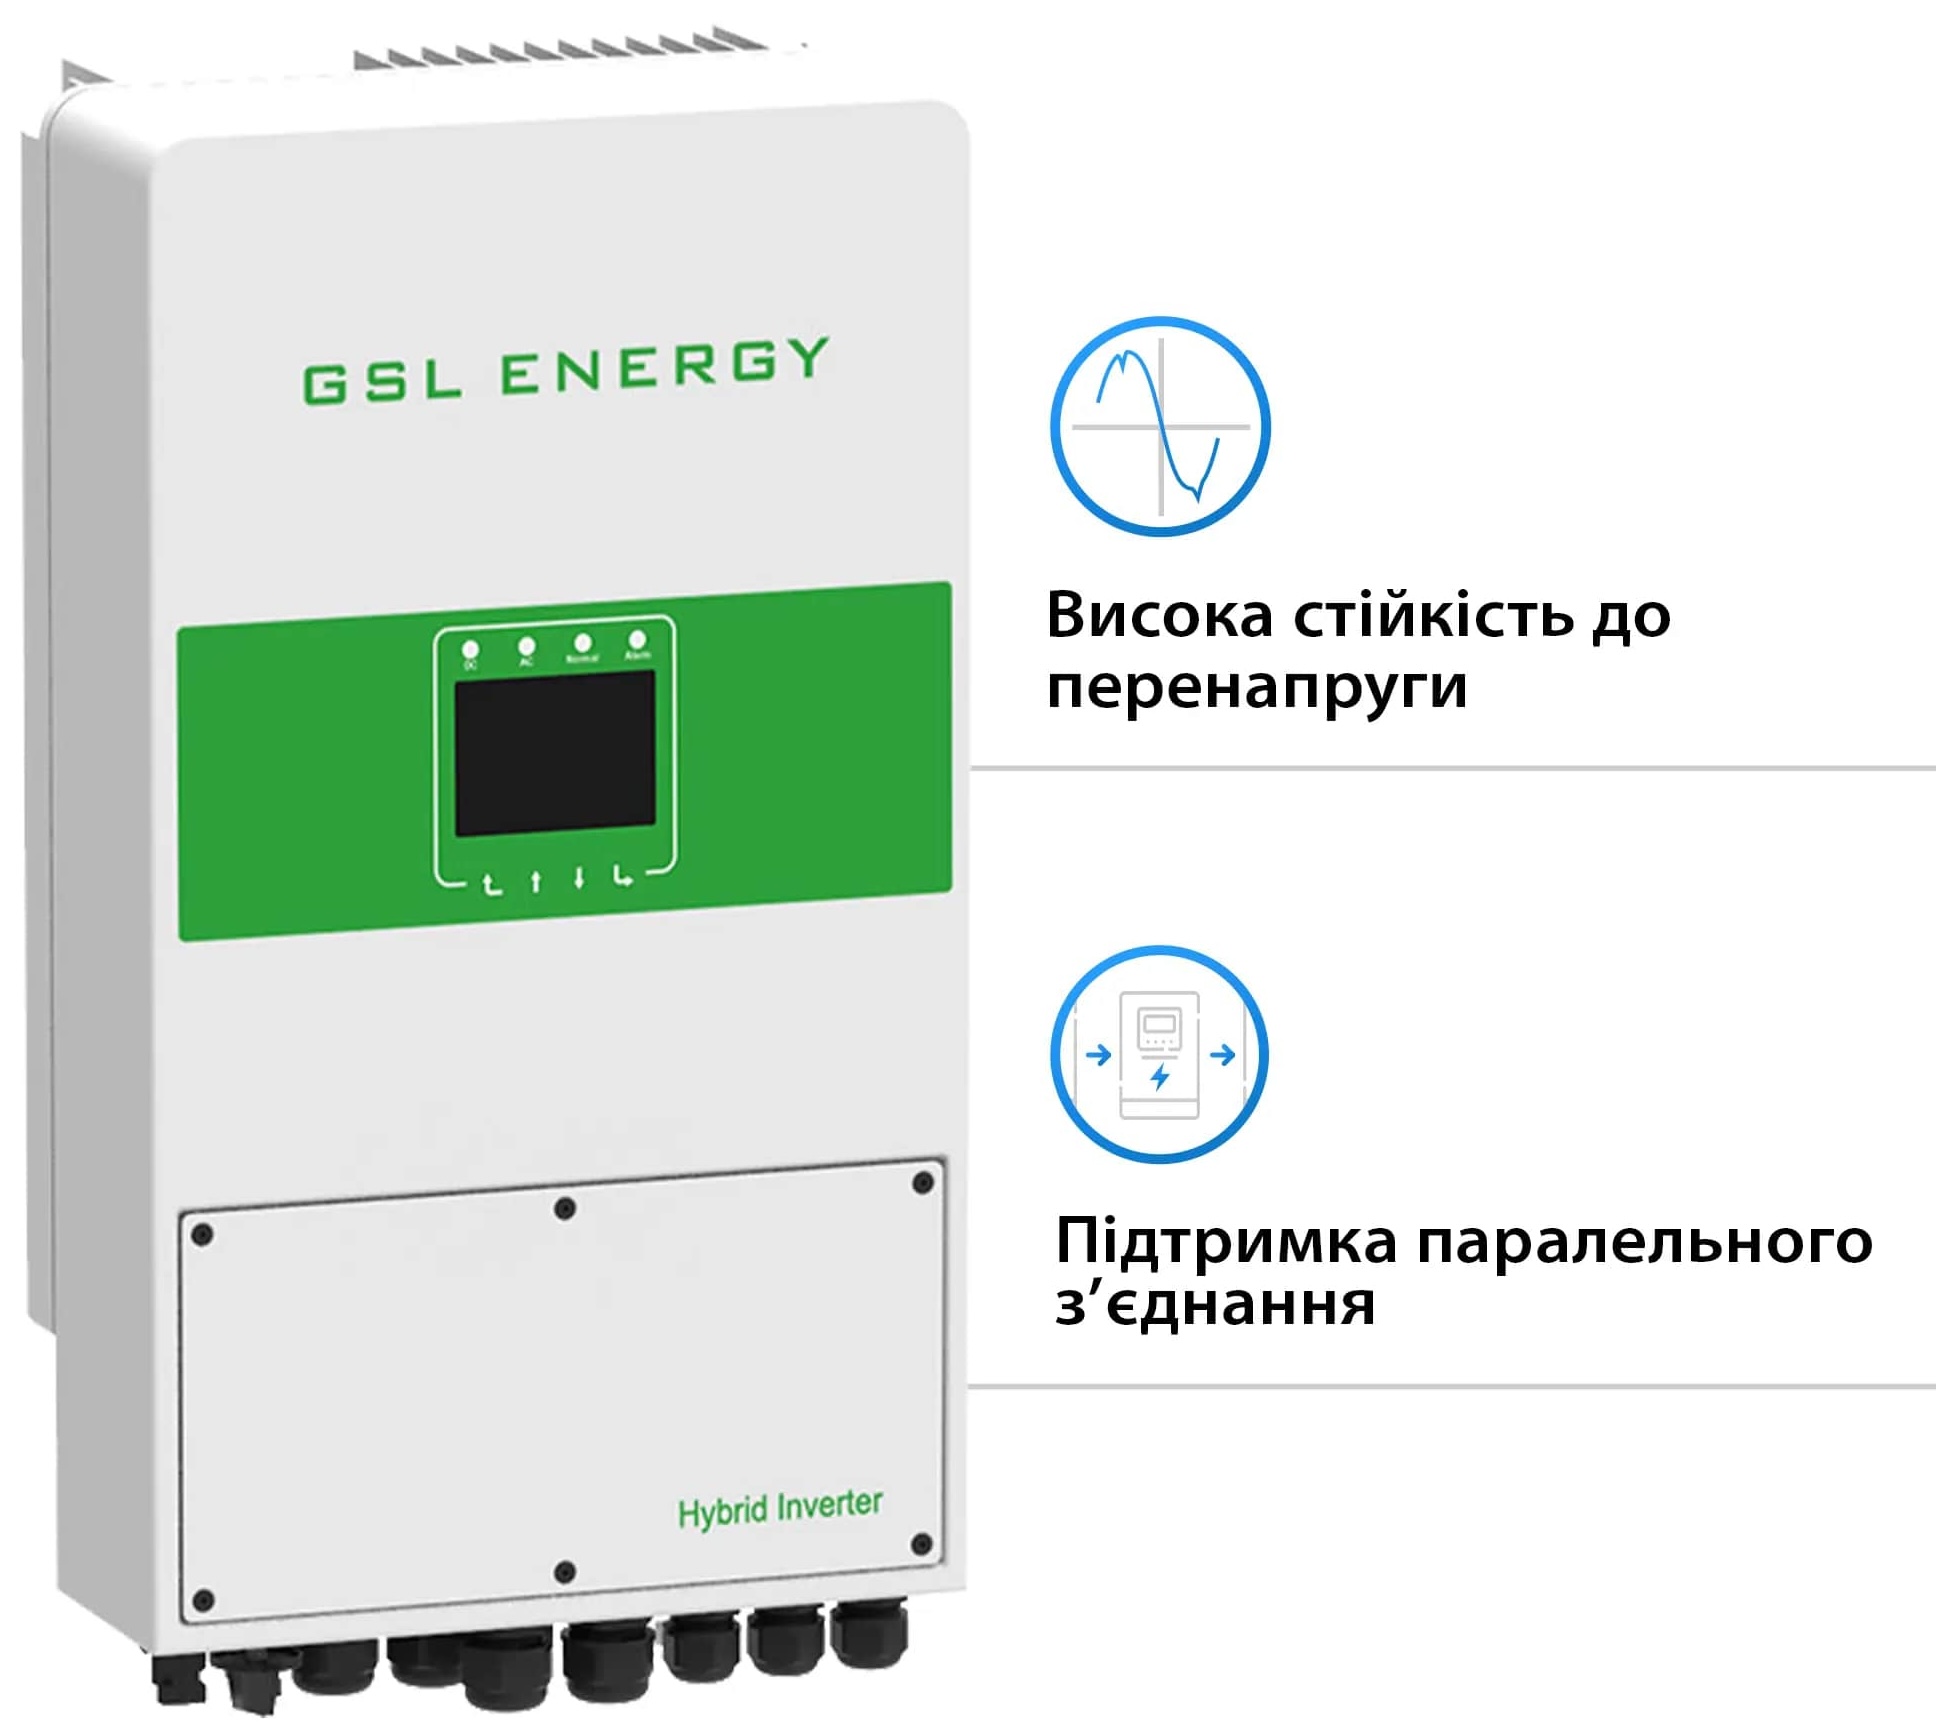 продаємо GSL 5kVA 230V Single Phase (GSL-H-5.0K-EU) в Україні - фото 4